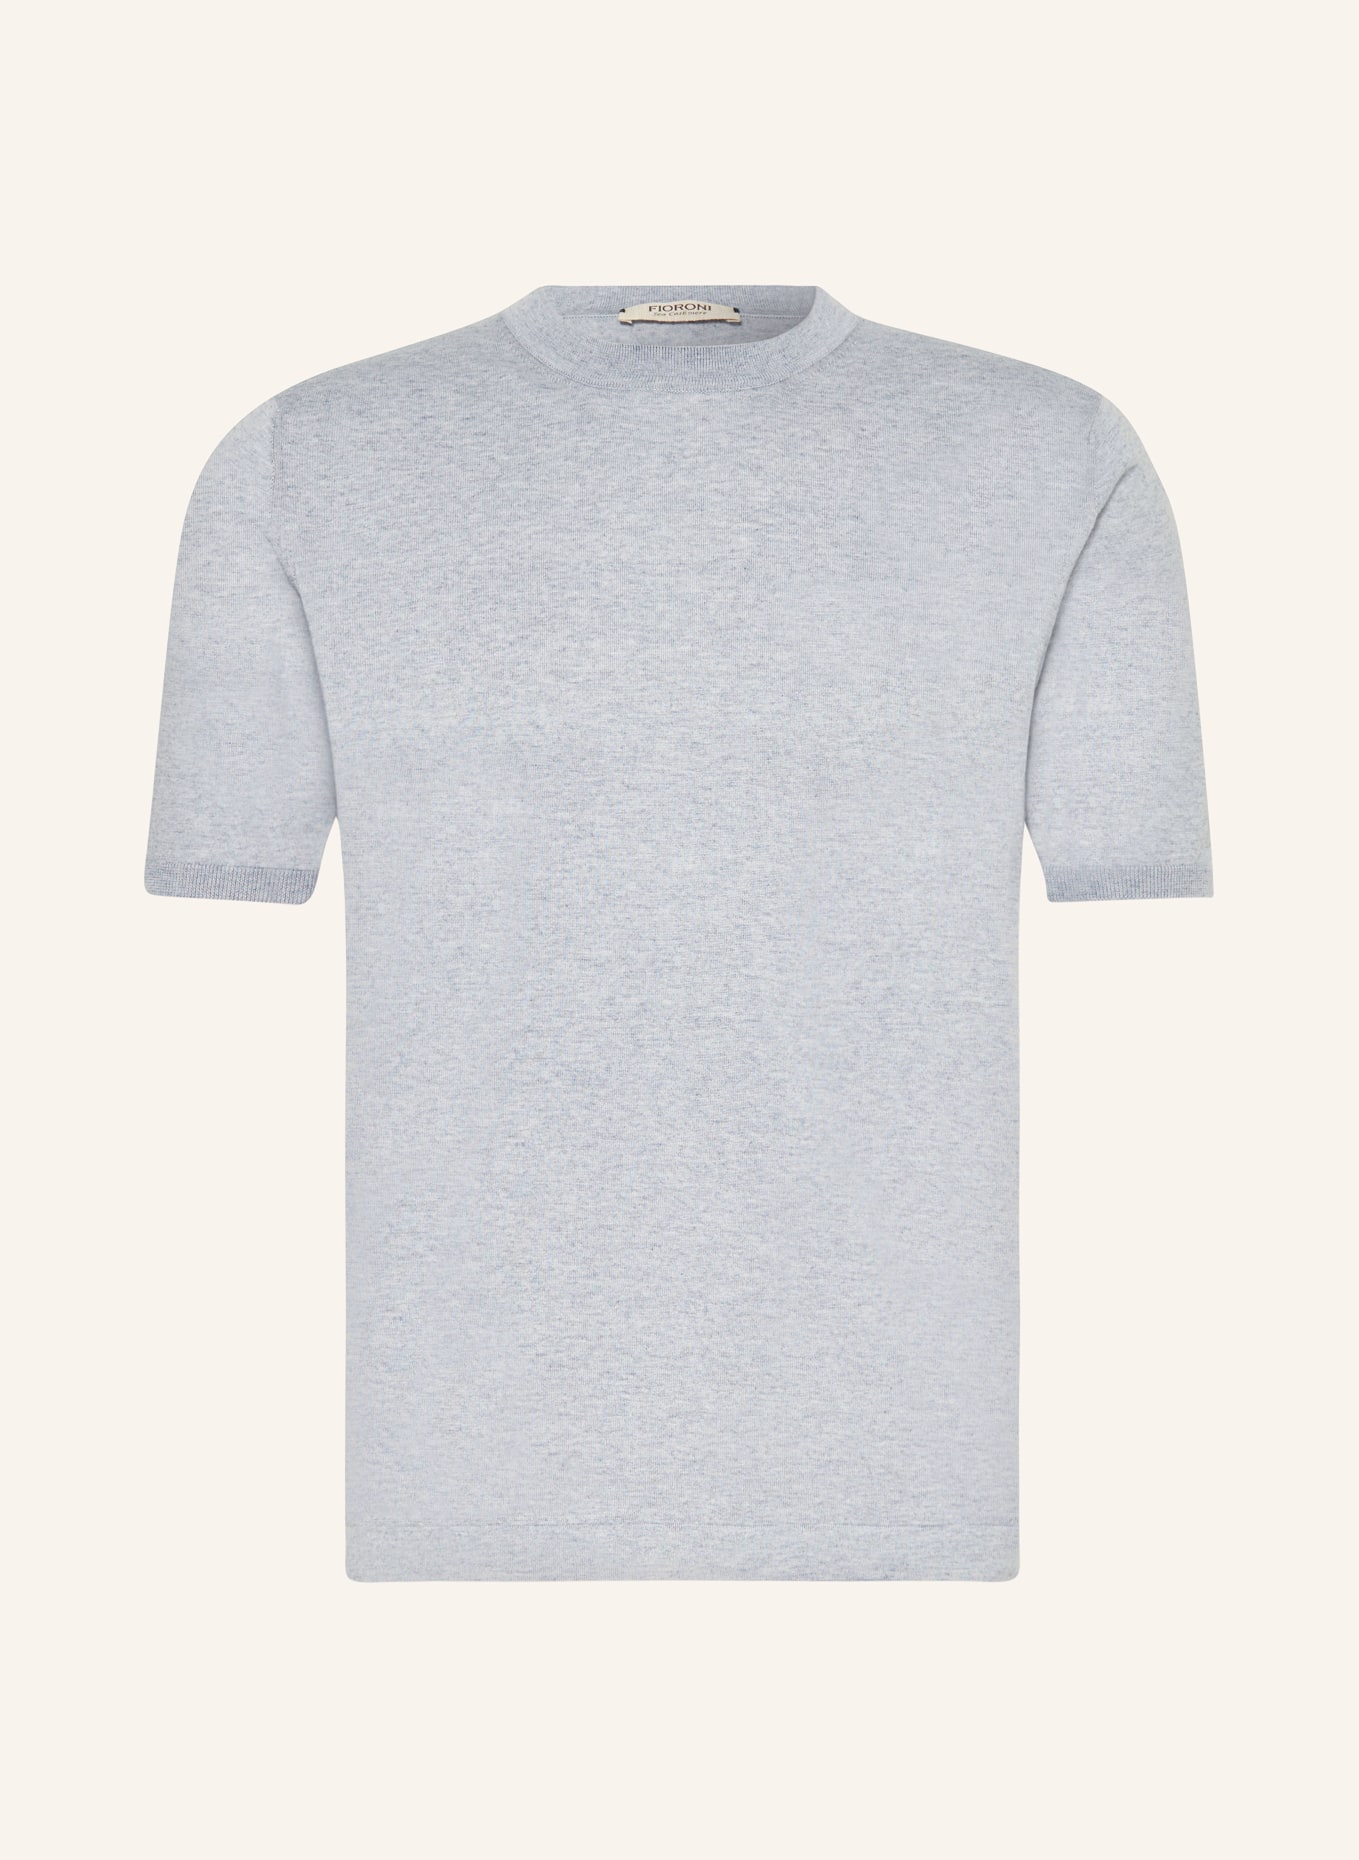 FIORONI Strickshirt, Farbe: GRAU (Bild 1)